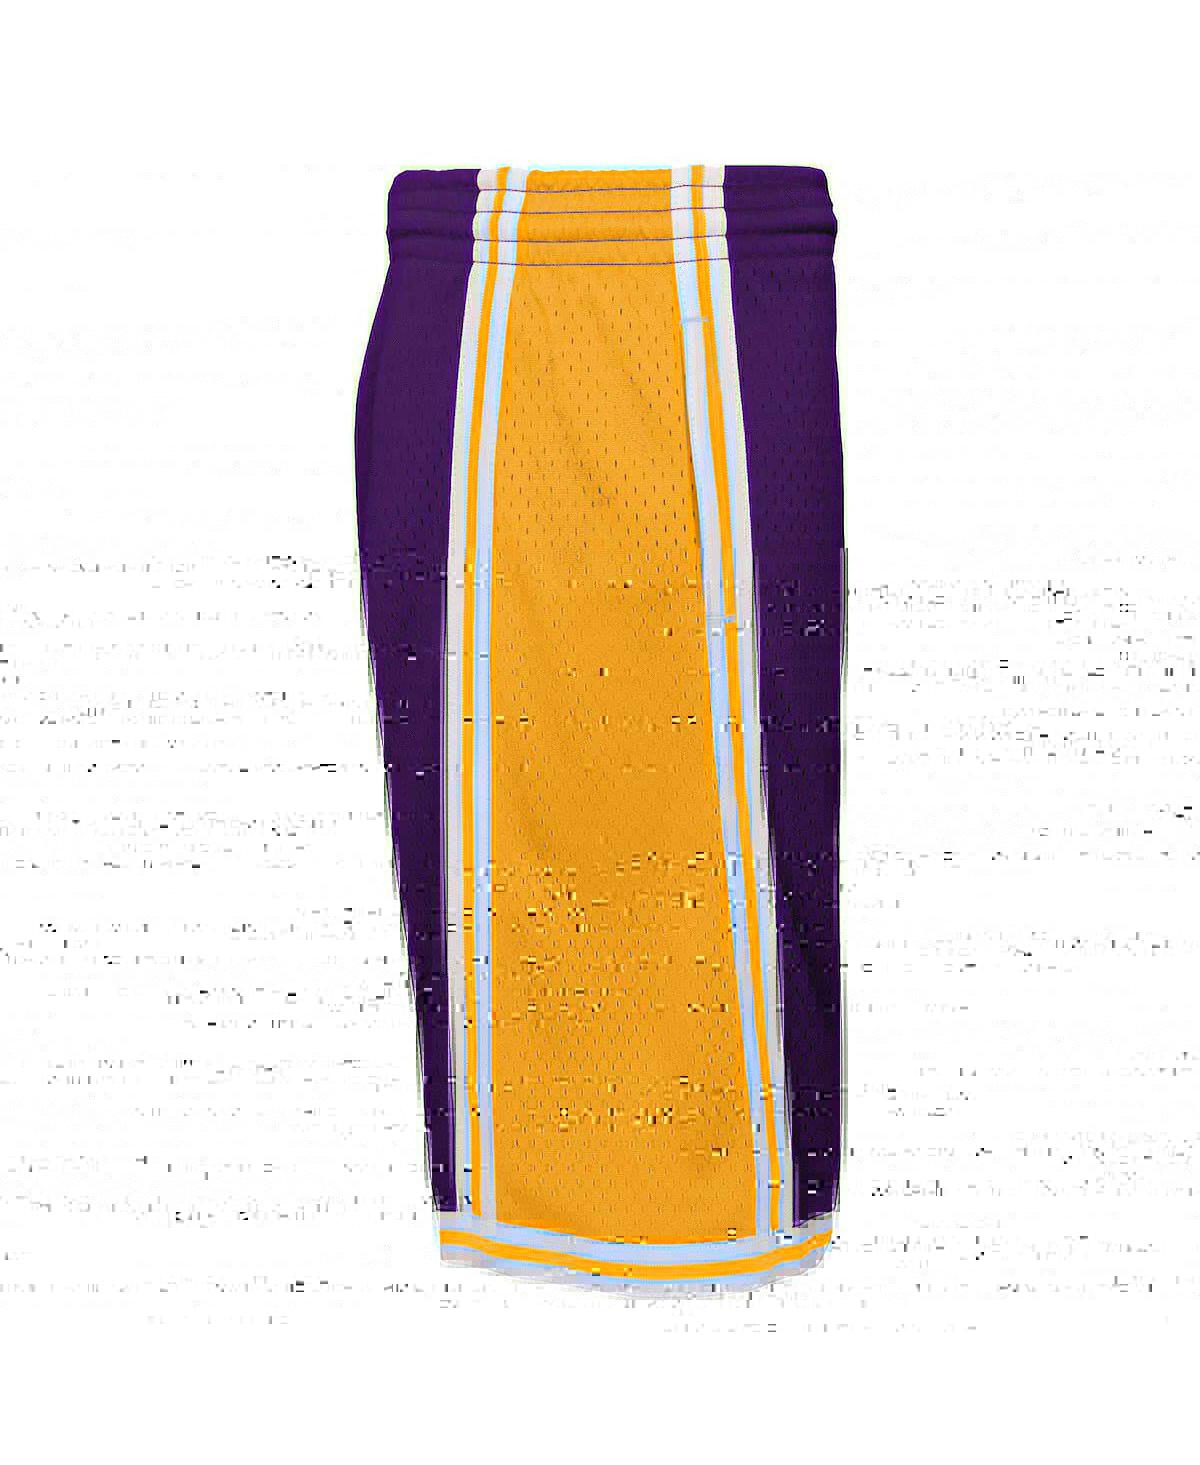 Shop Mitchell & Ness Big Boys  Purple Los Angeles Lakers Hardwood Classics Swingman Shorts